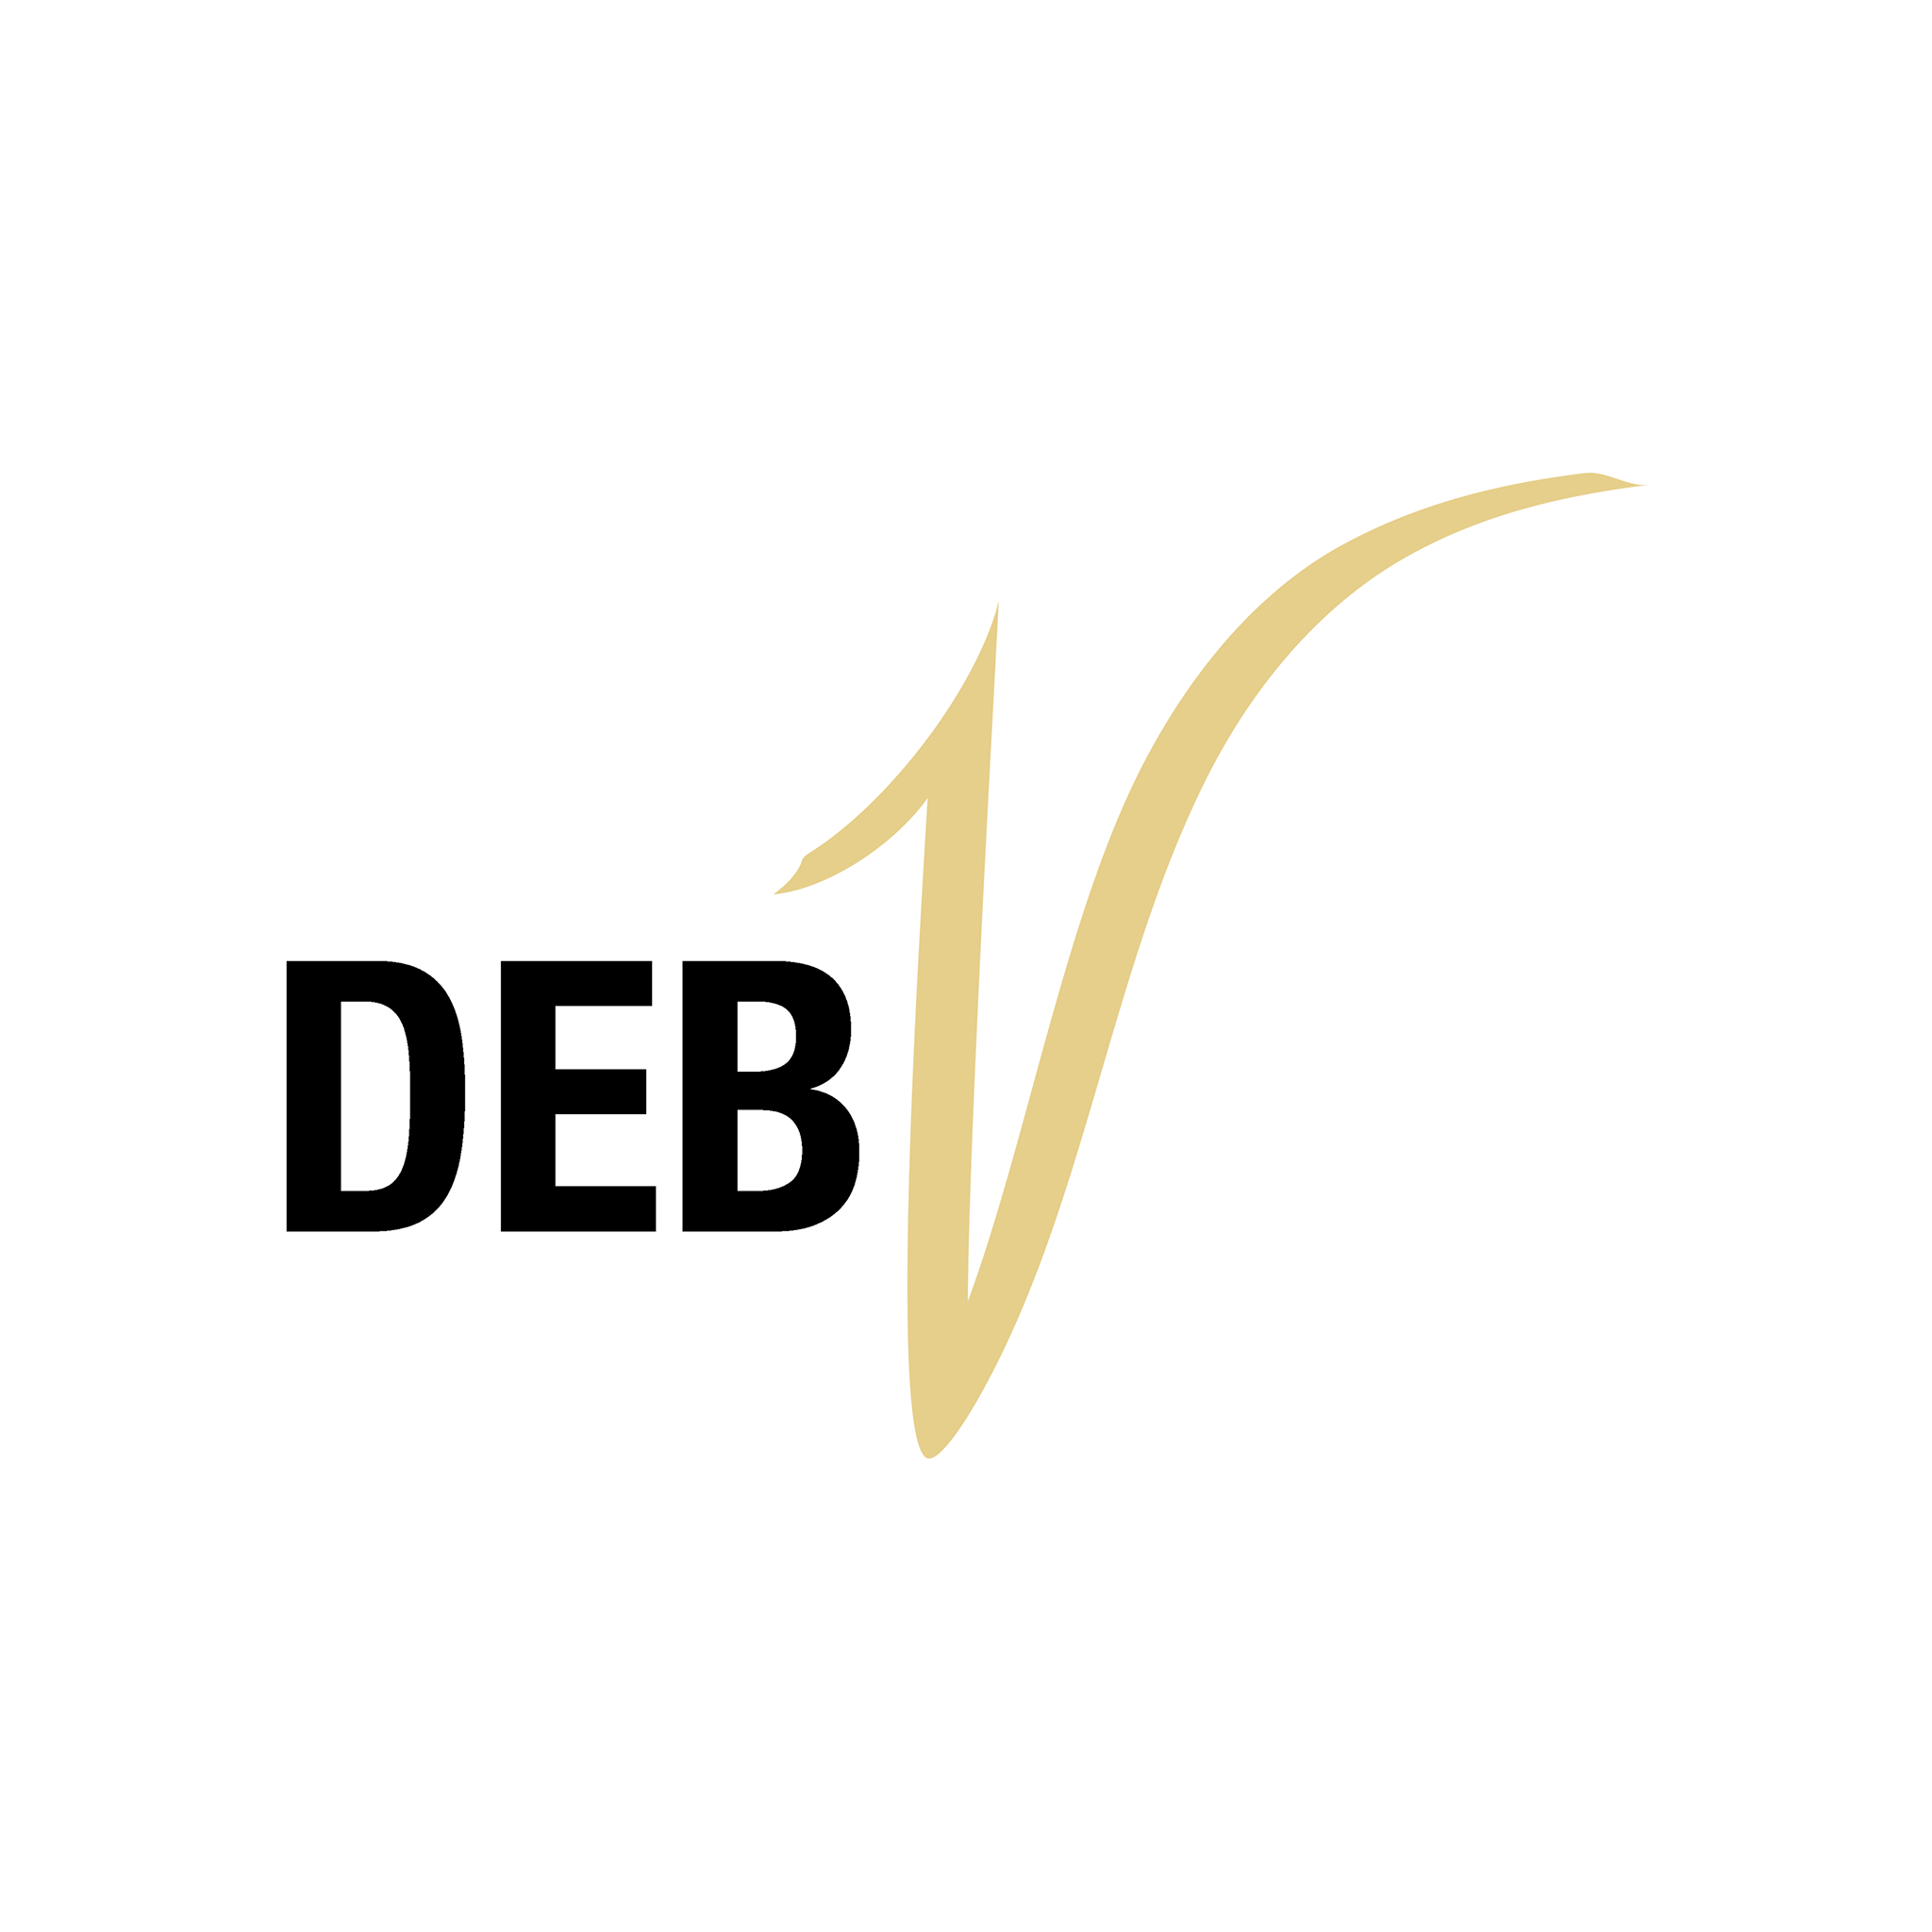 Deb Logo - Deb Vorthmann. #Logo #Design by Morgan Leigh Meisenheimer. MLM